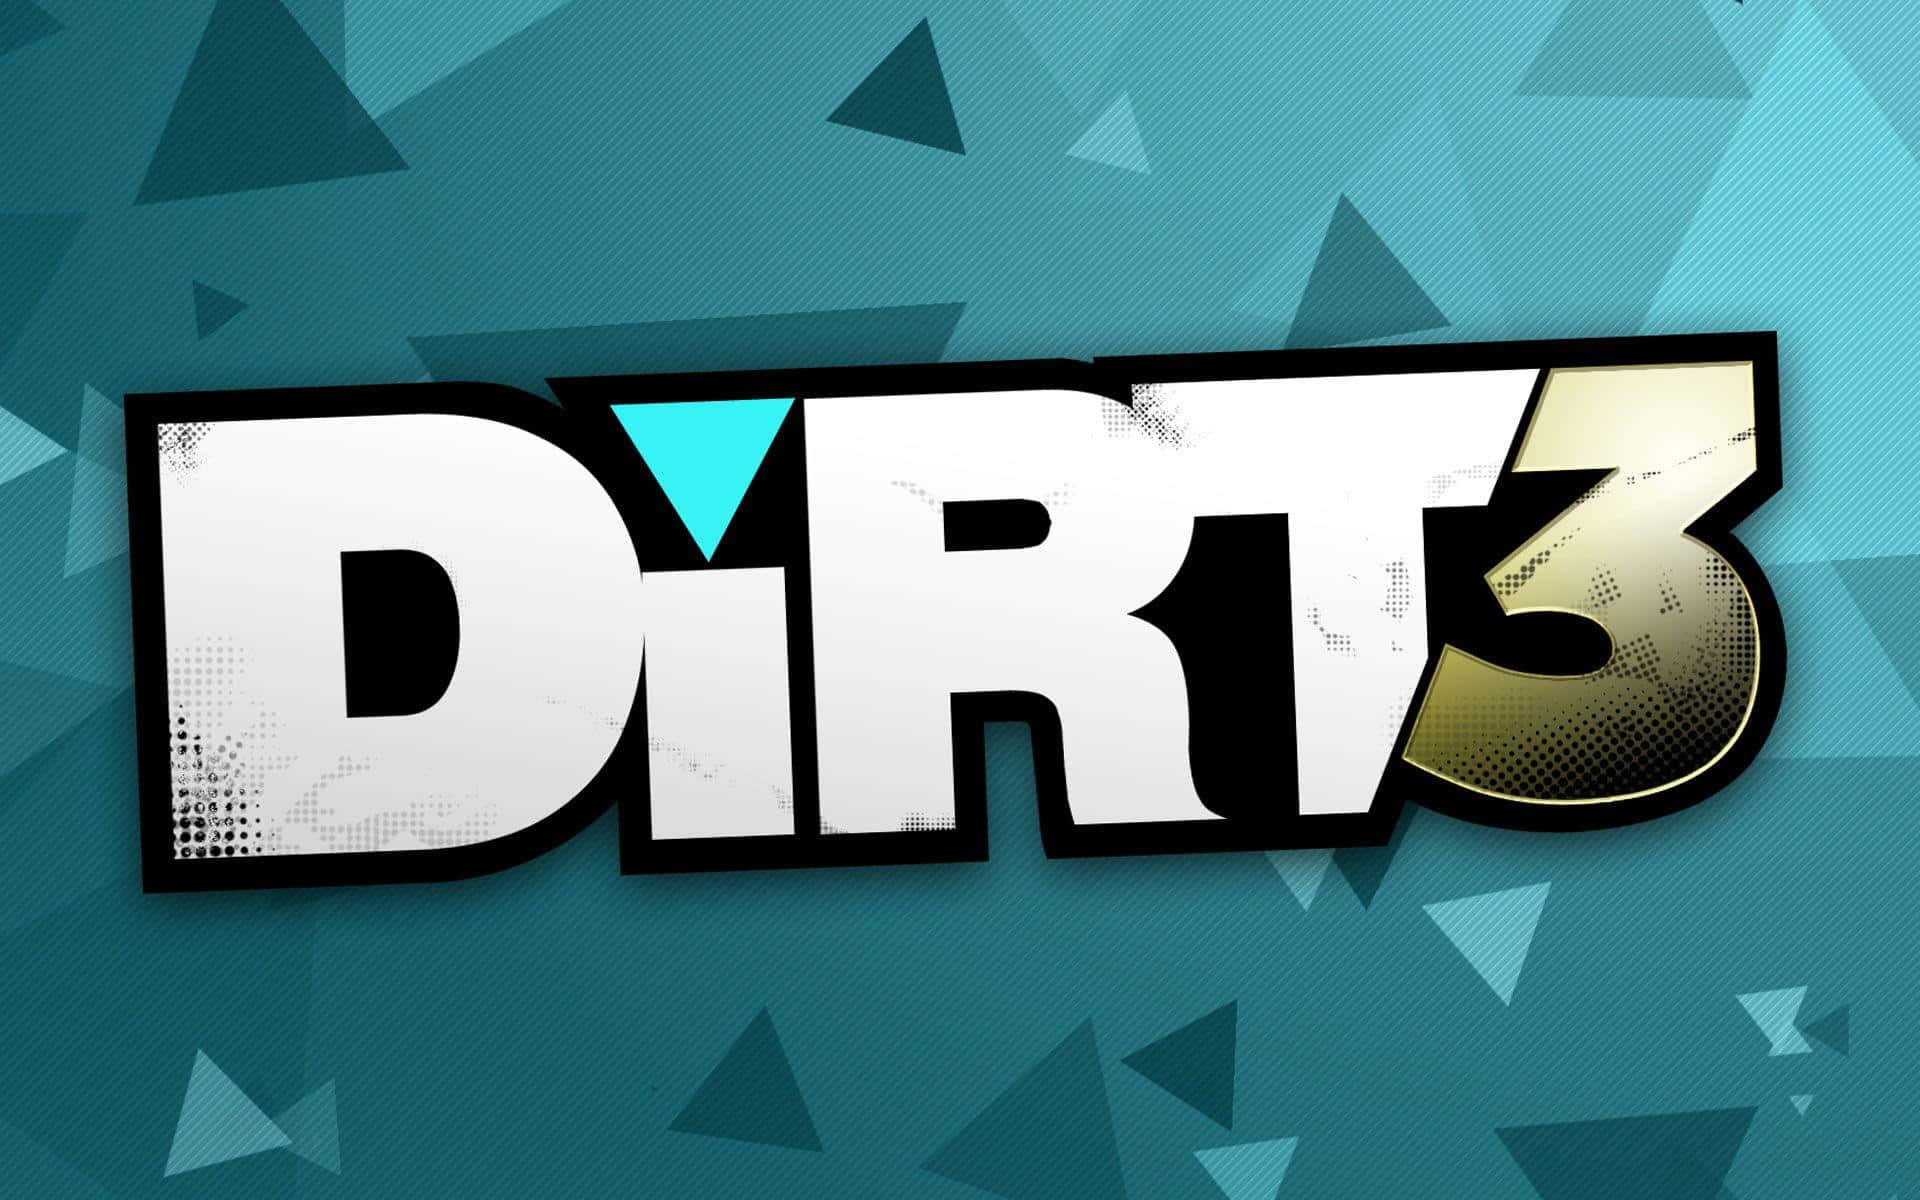 Dirt 3 Logo On A Blue Background